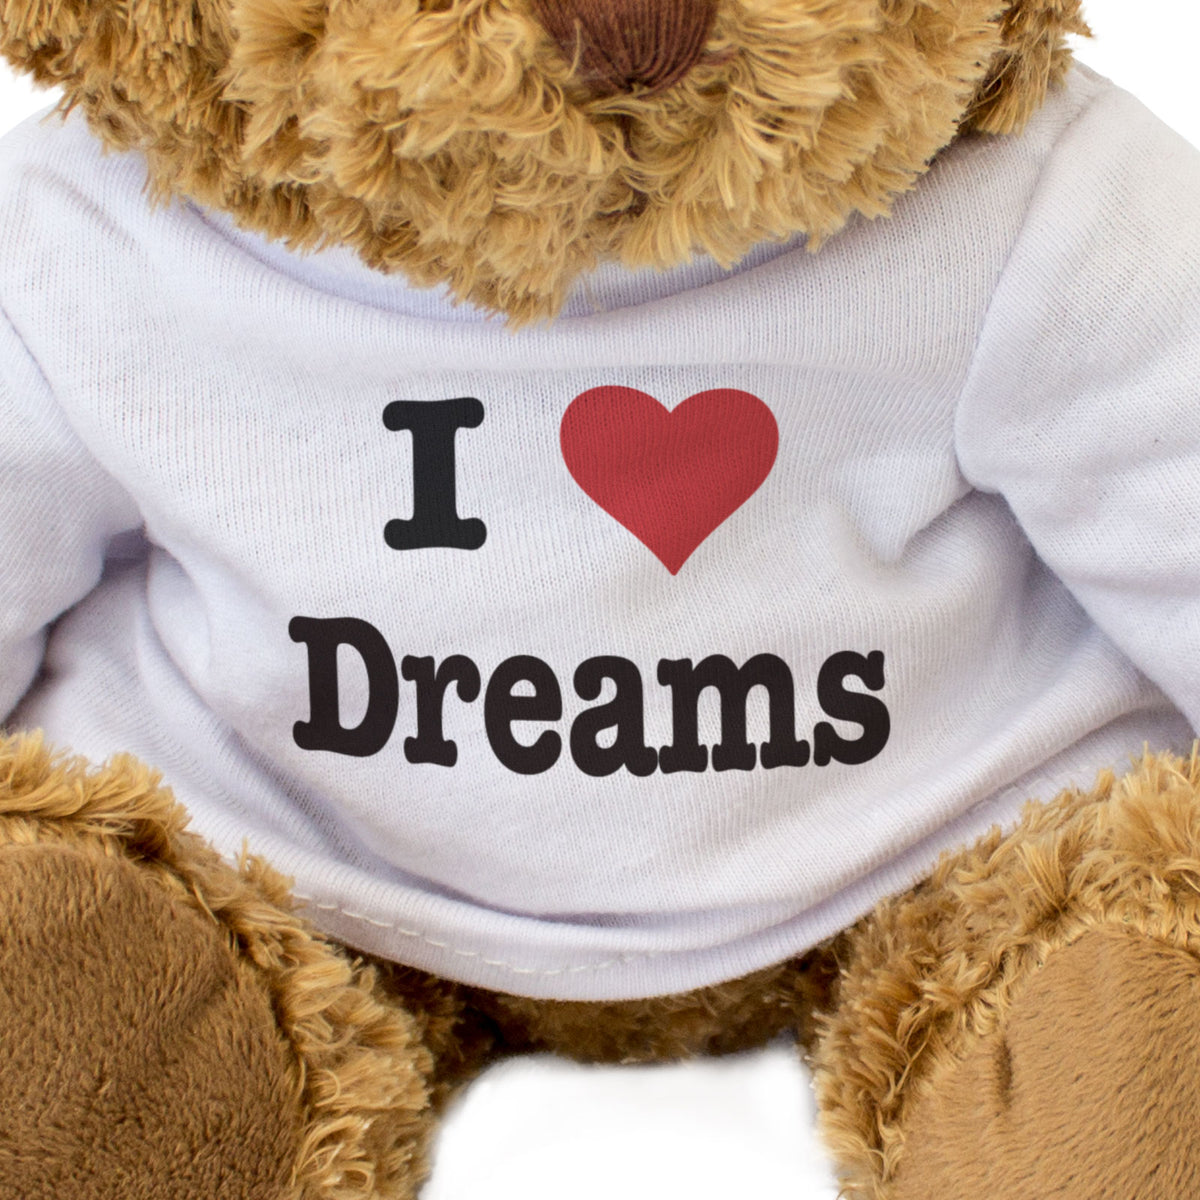 I Love Dreams - Teddy Bear